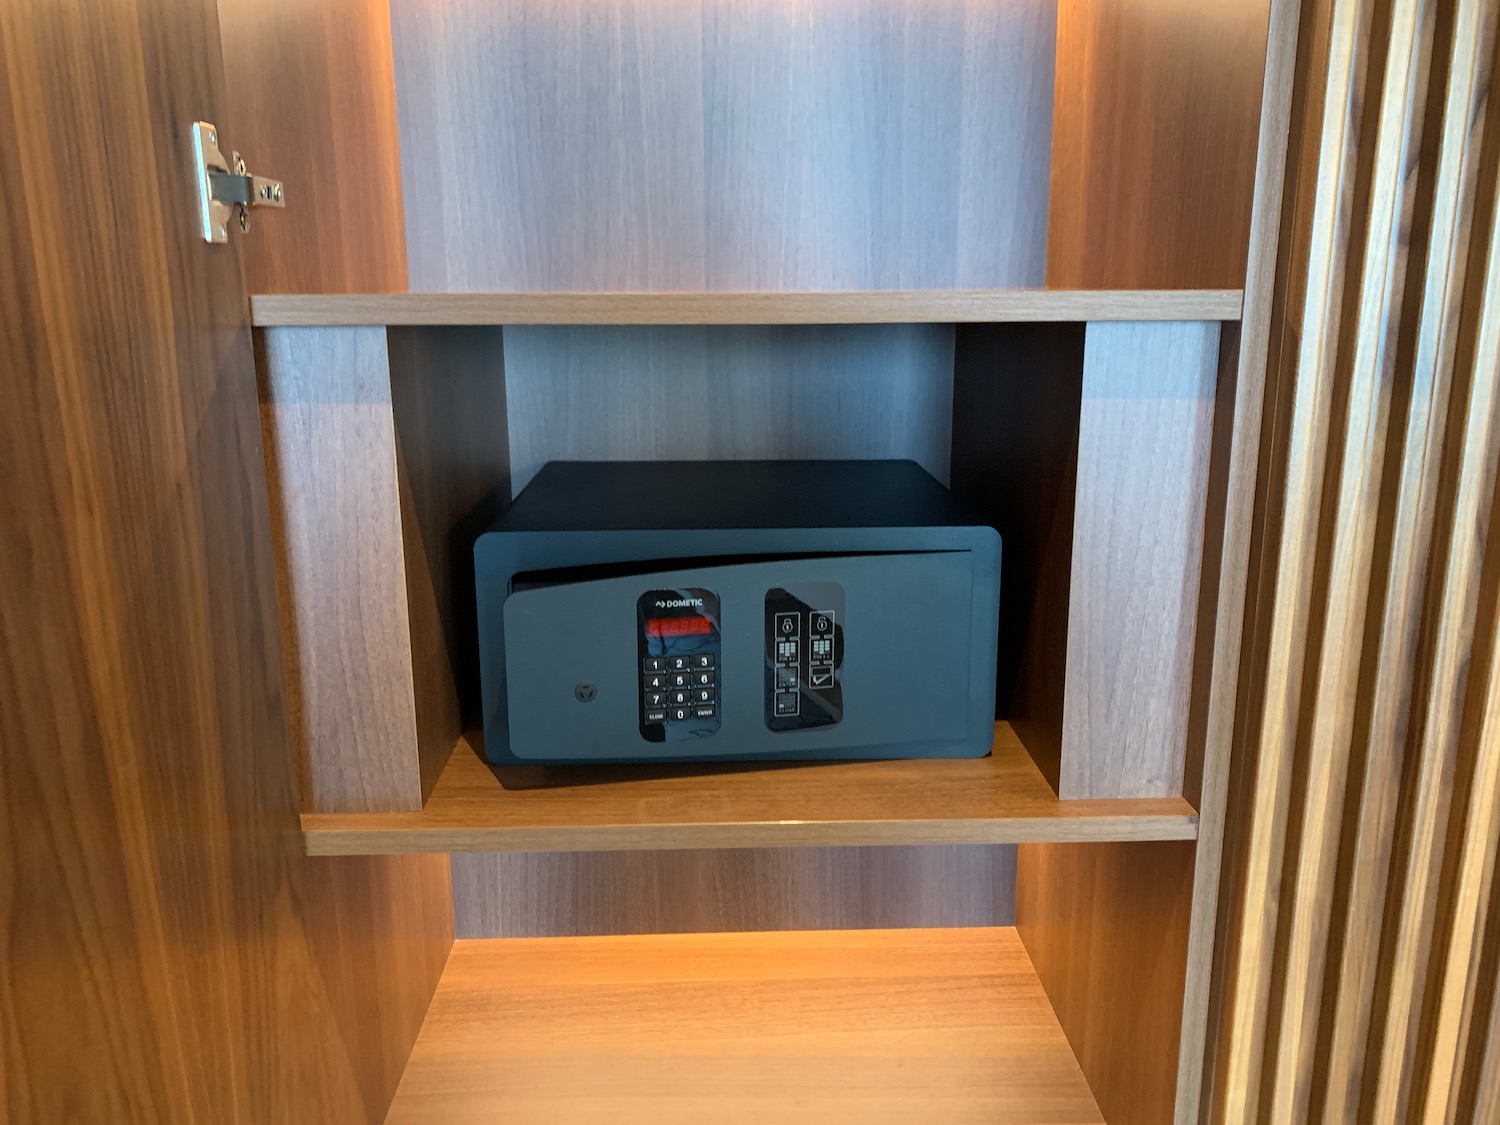 a safe in a wooden shelf